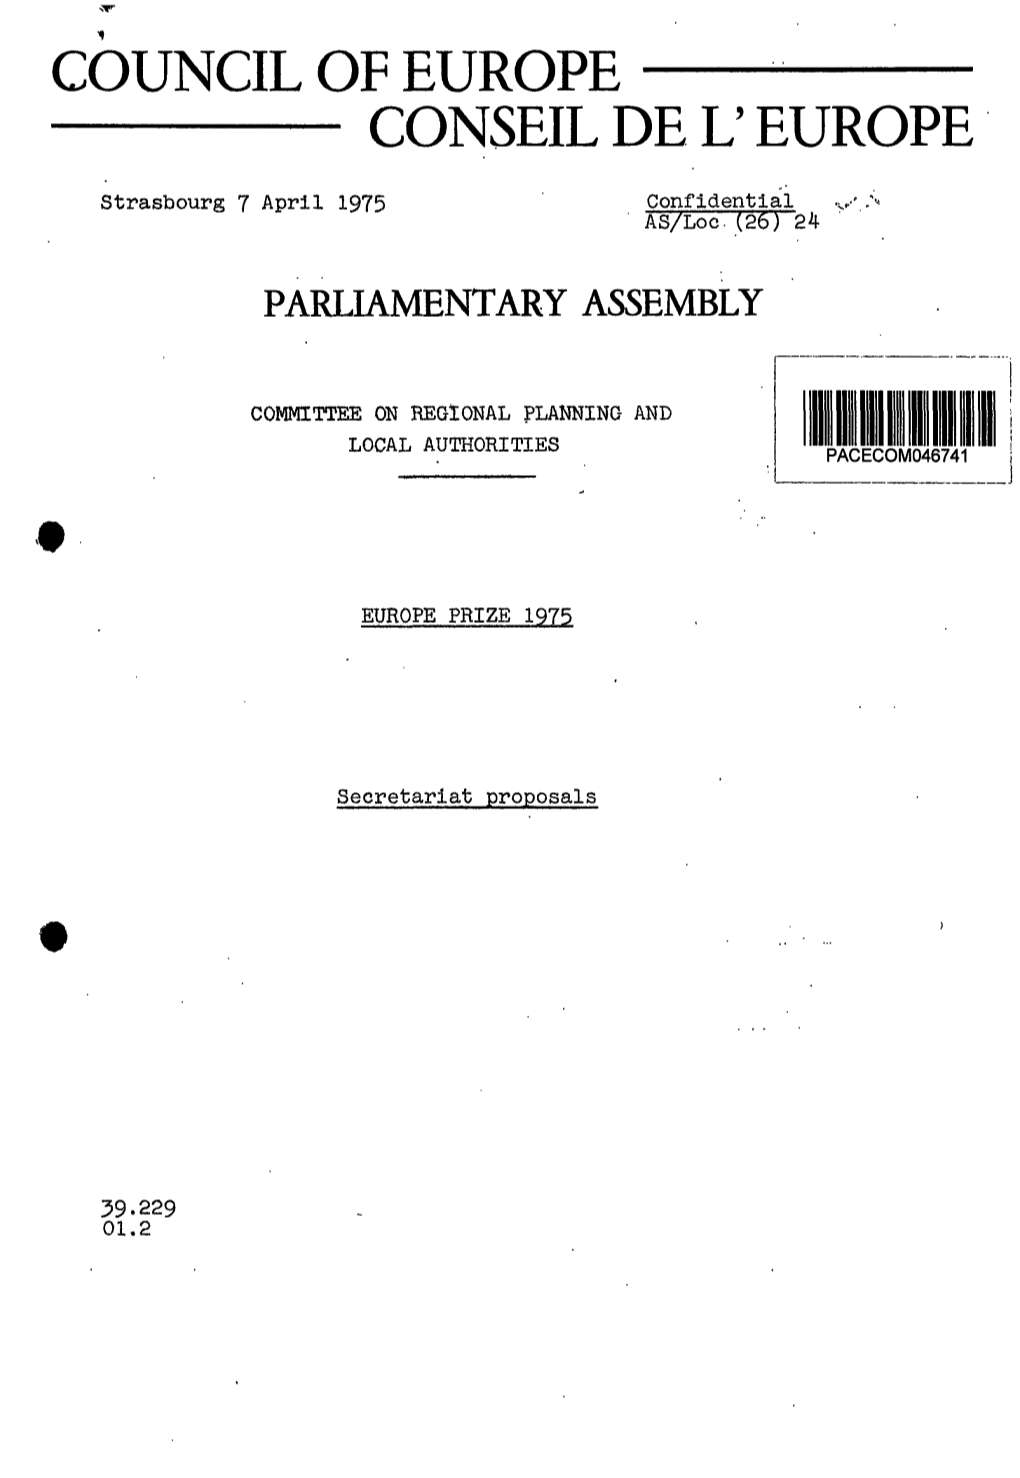 Europe Prize 1975 : Secretariat Proposals